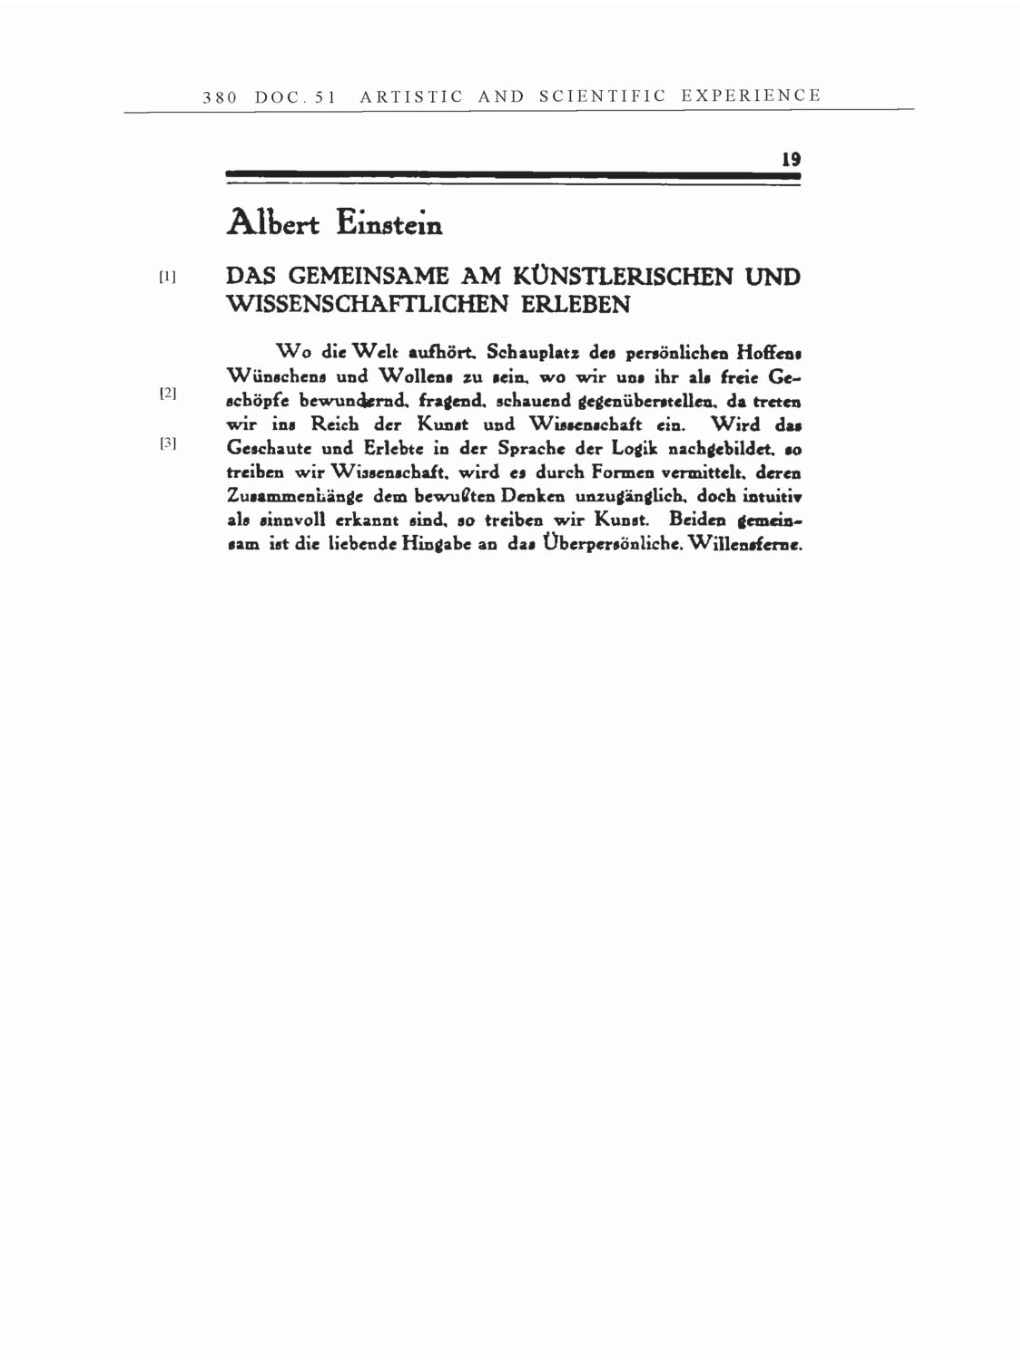 Volume 7: The Berlin Years: Writings, 1918-1921 page 380